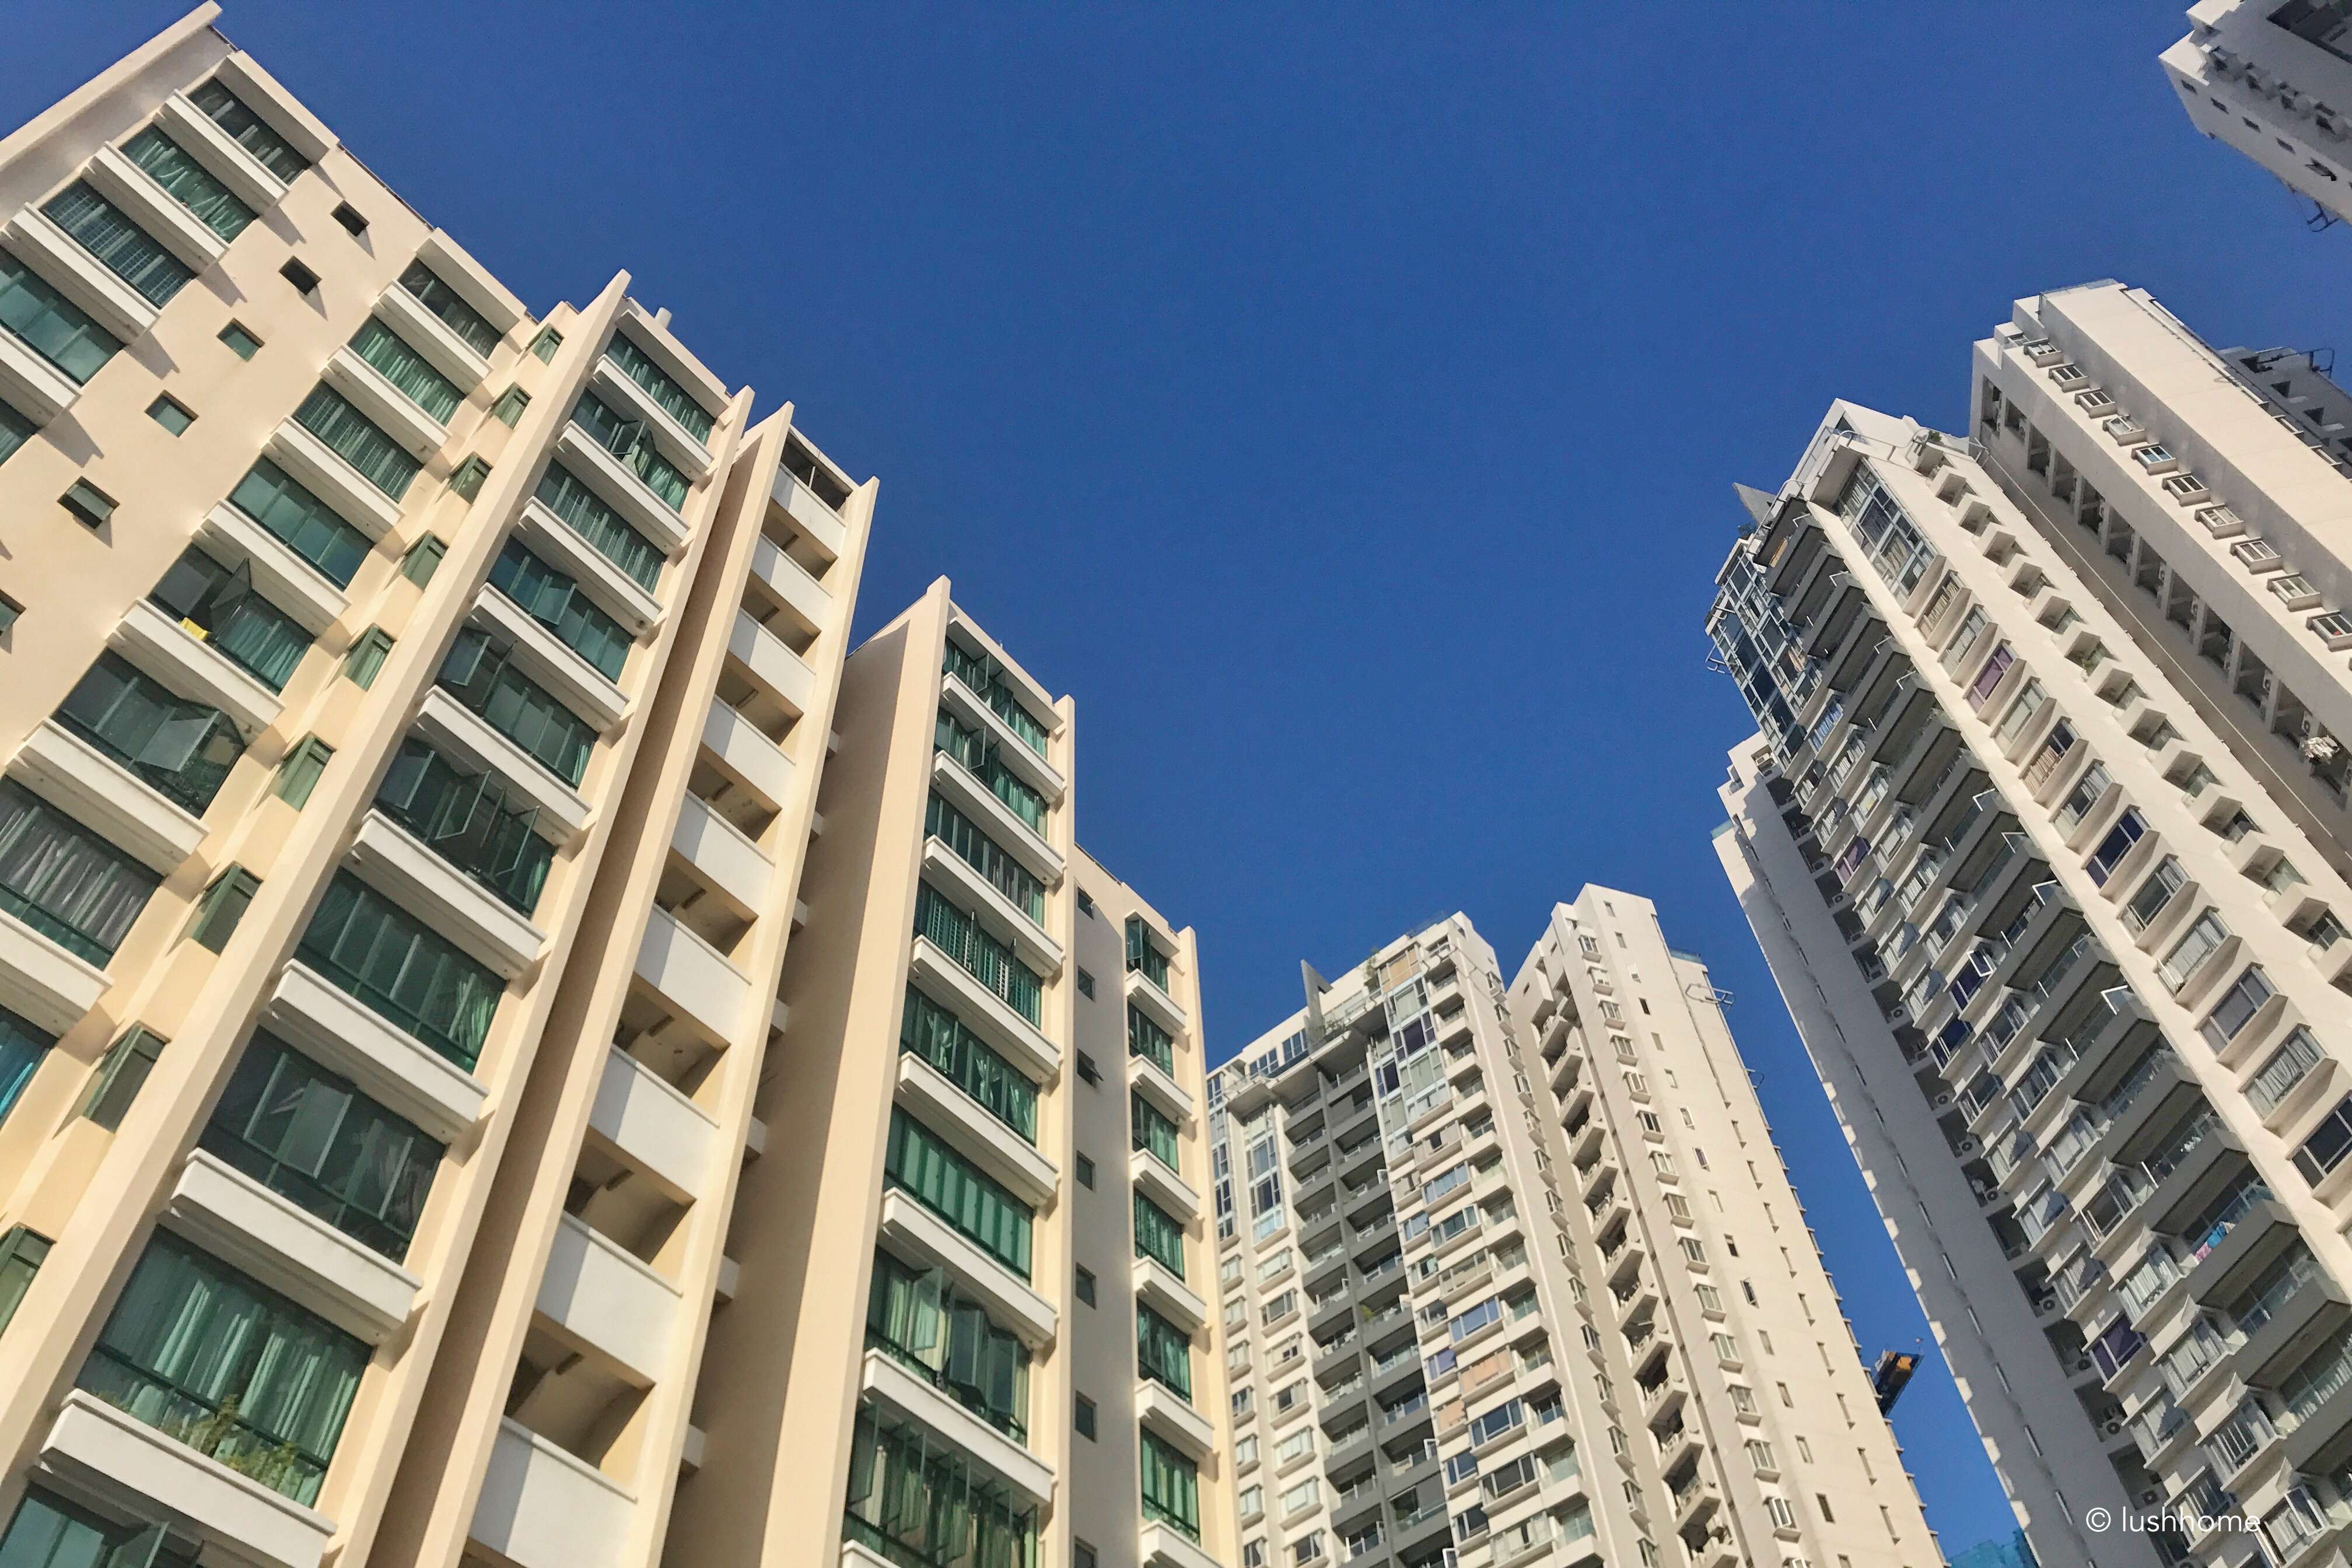 Singapore property market faces risks from unsold units, uncertain economy: MAS